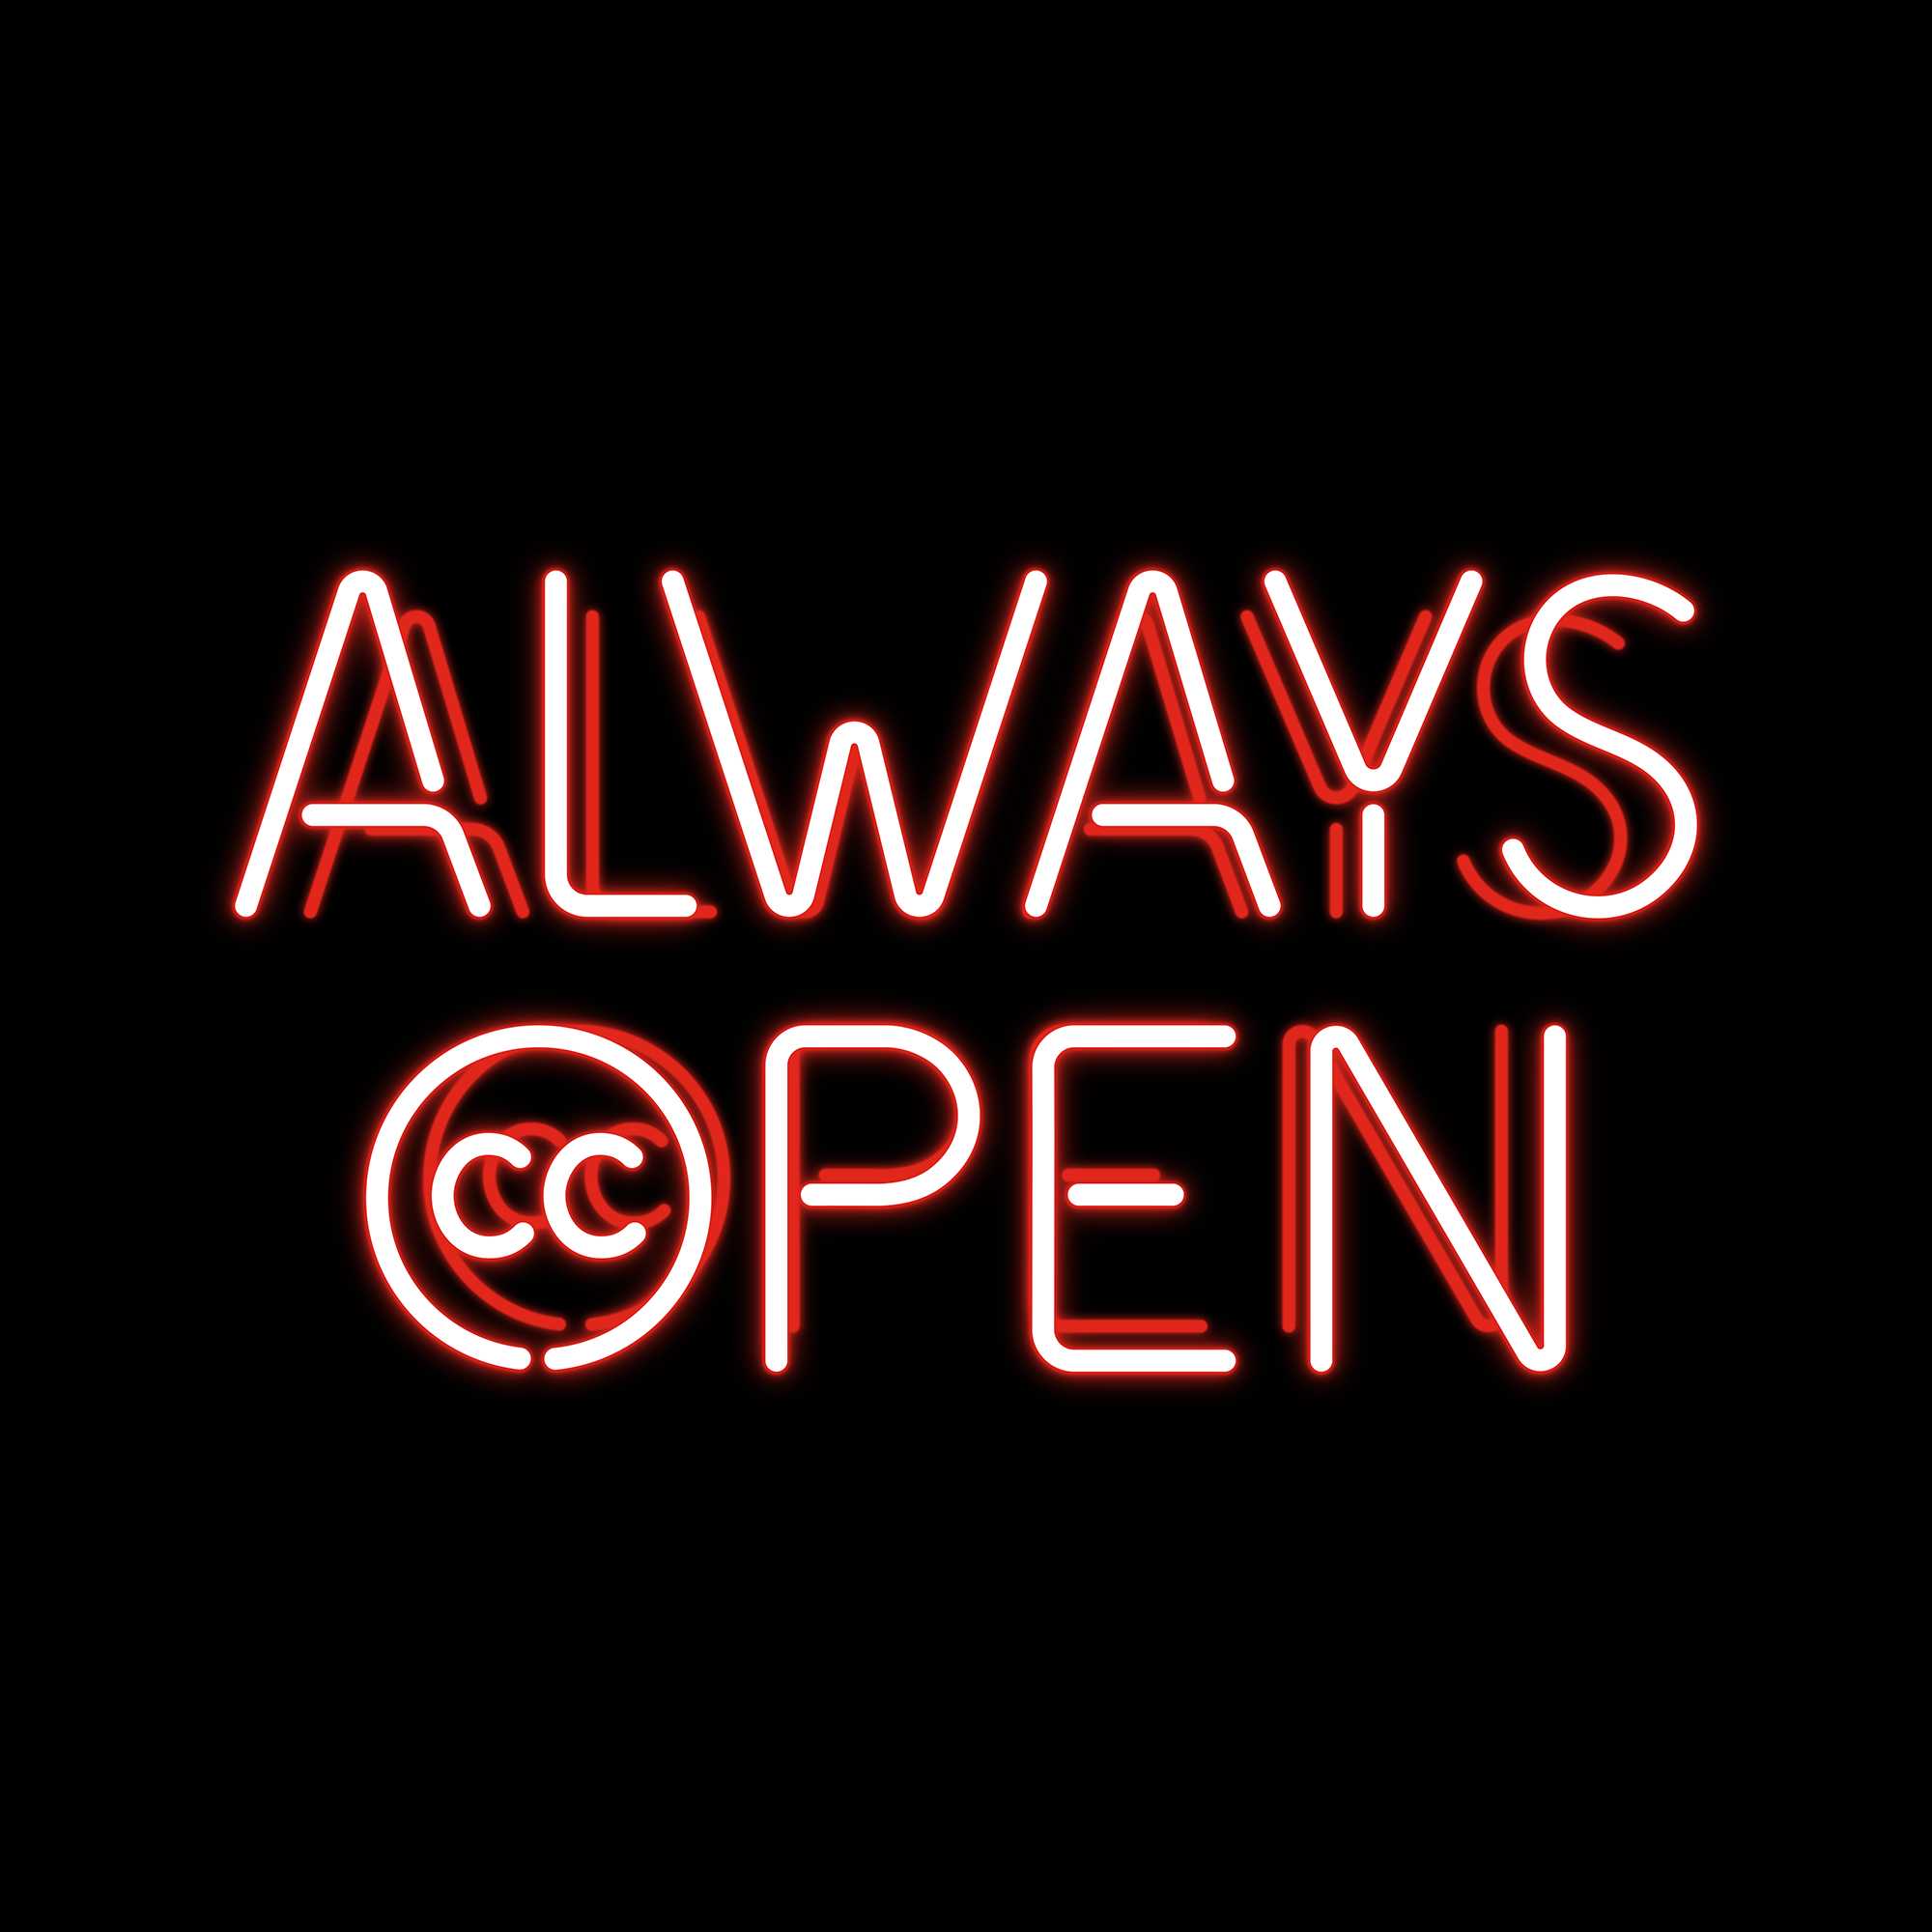 Creative Commons - Always Open